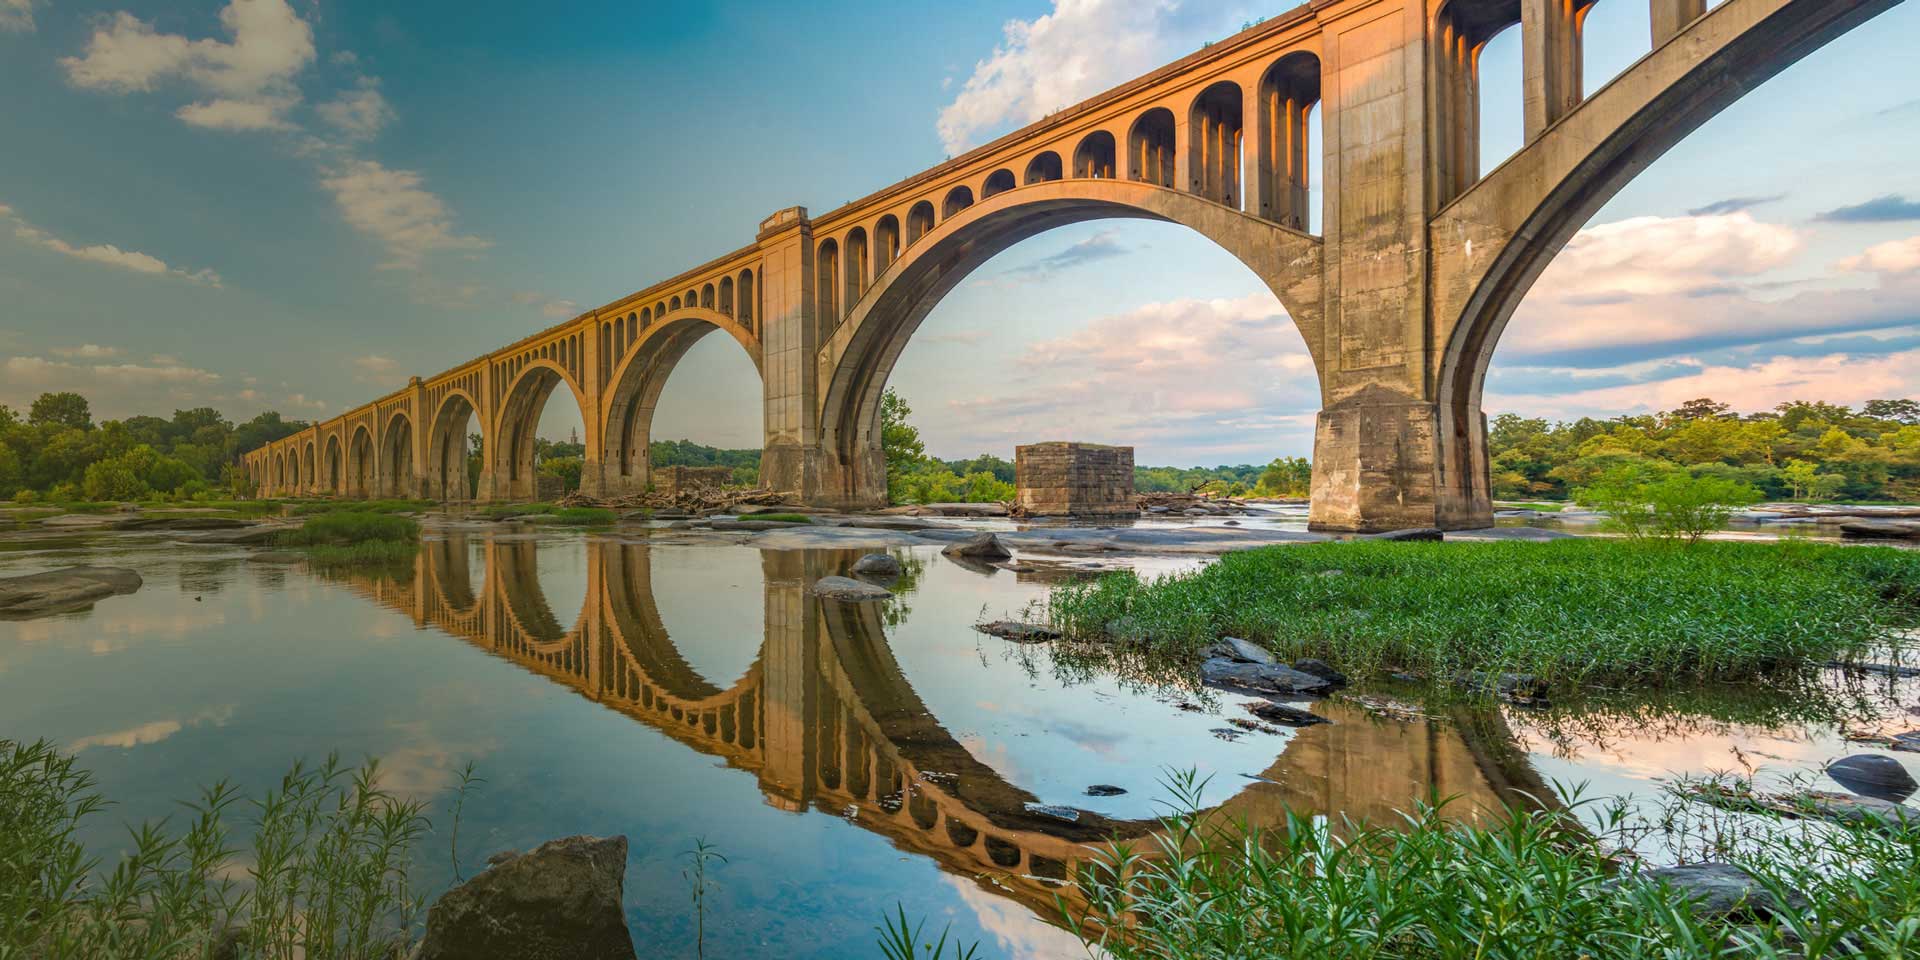 Bridge spanning across river in Virginia